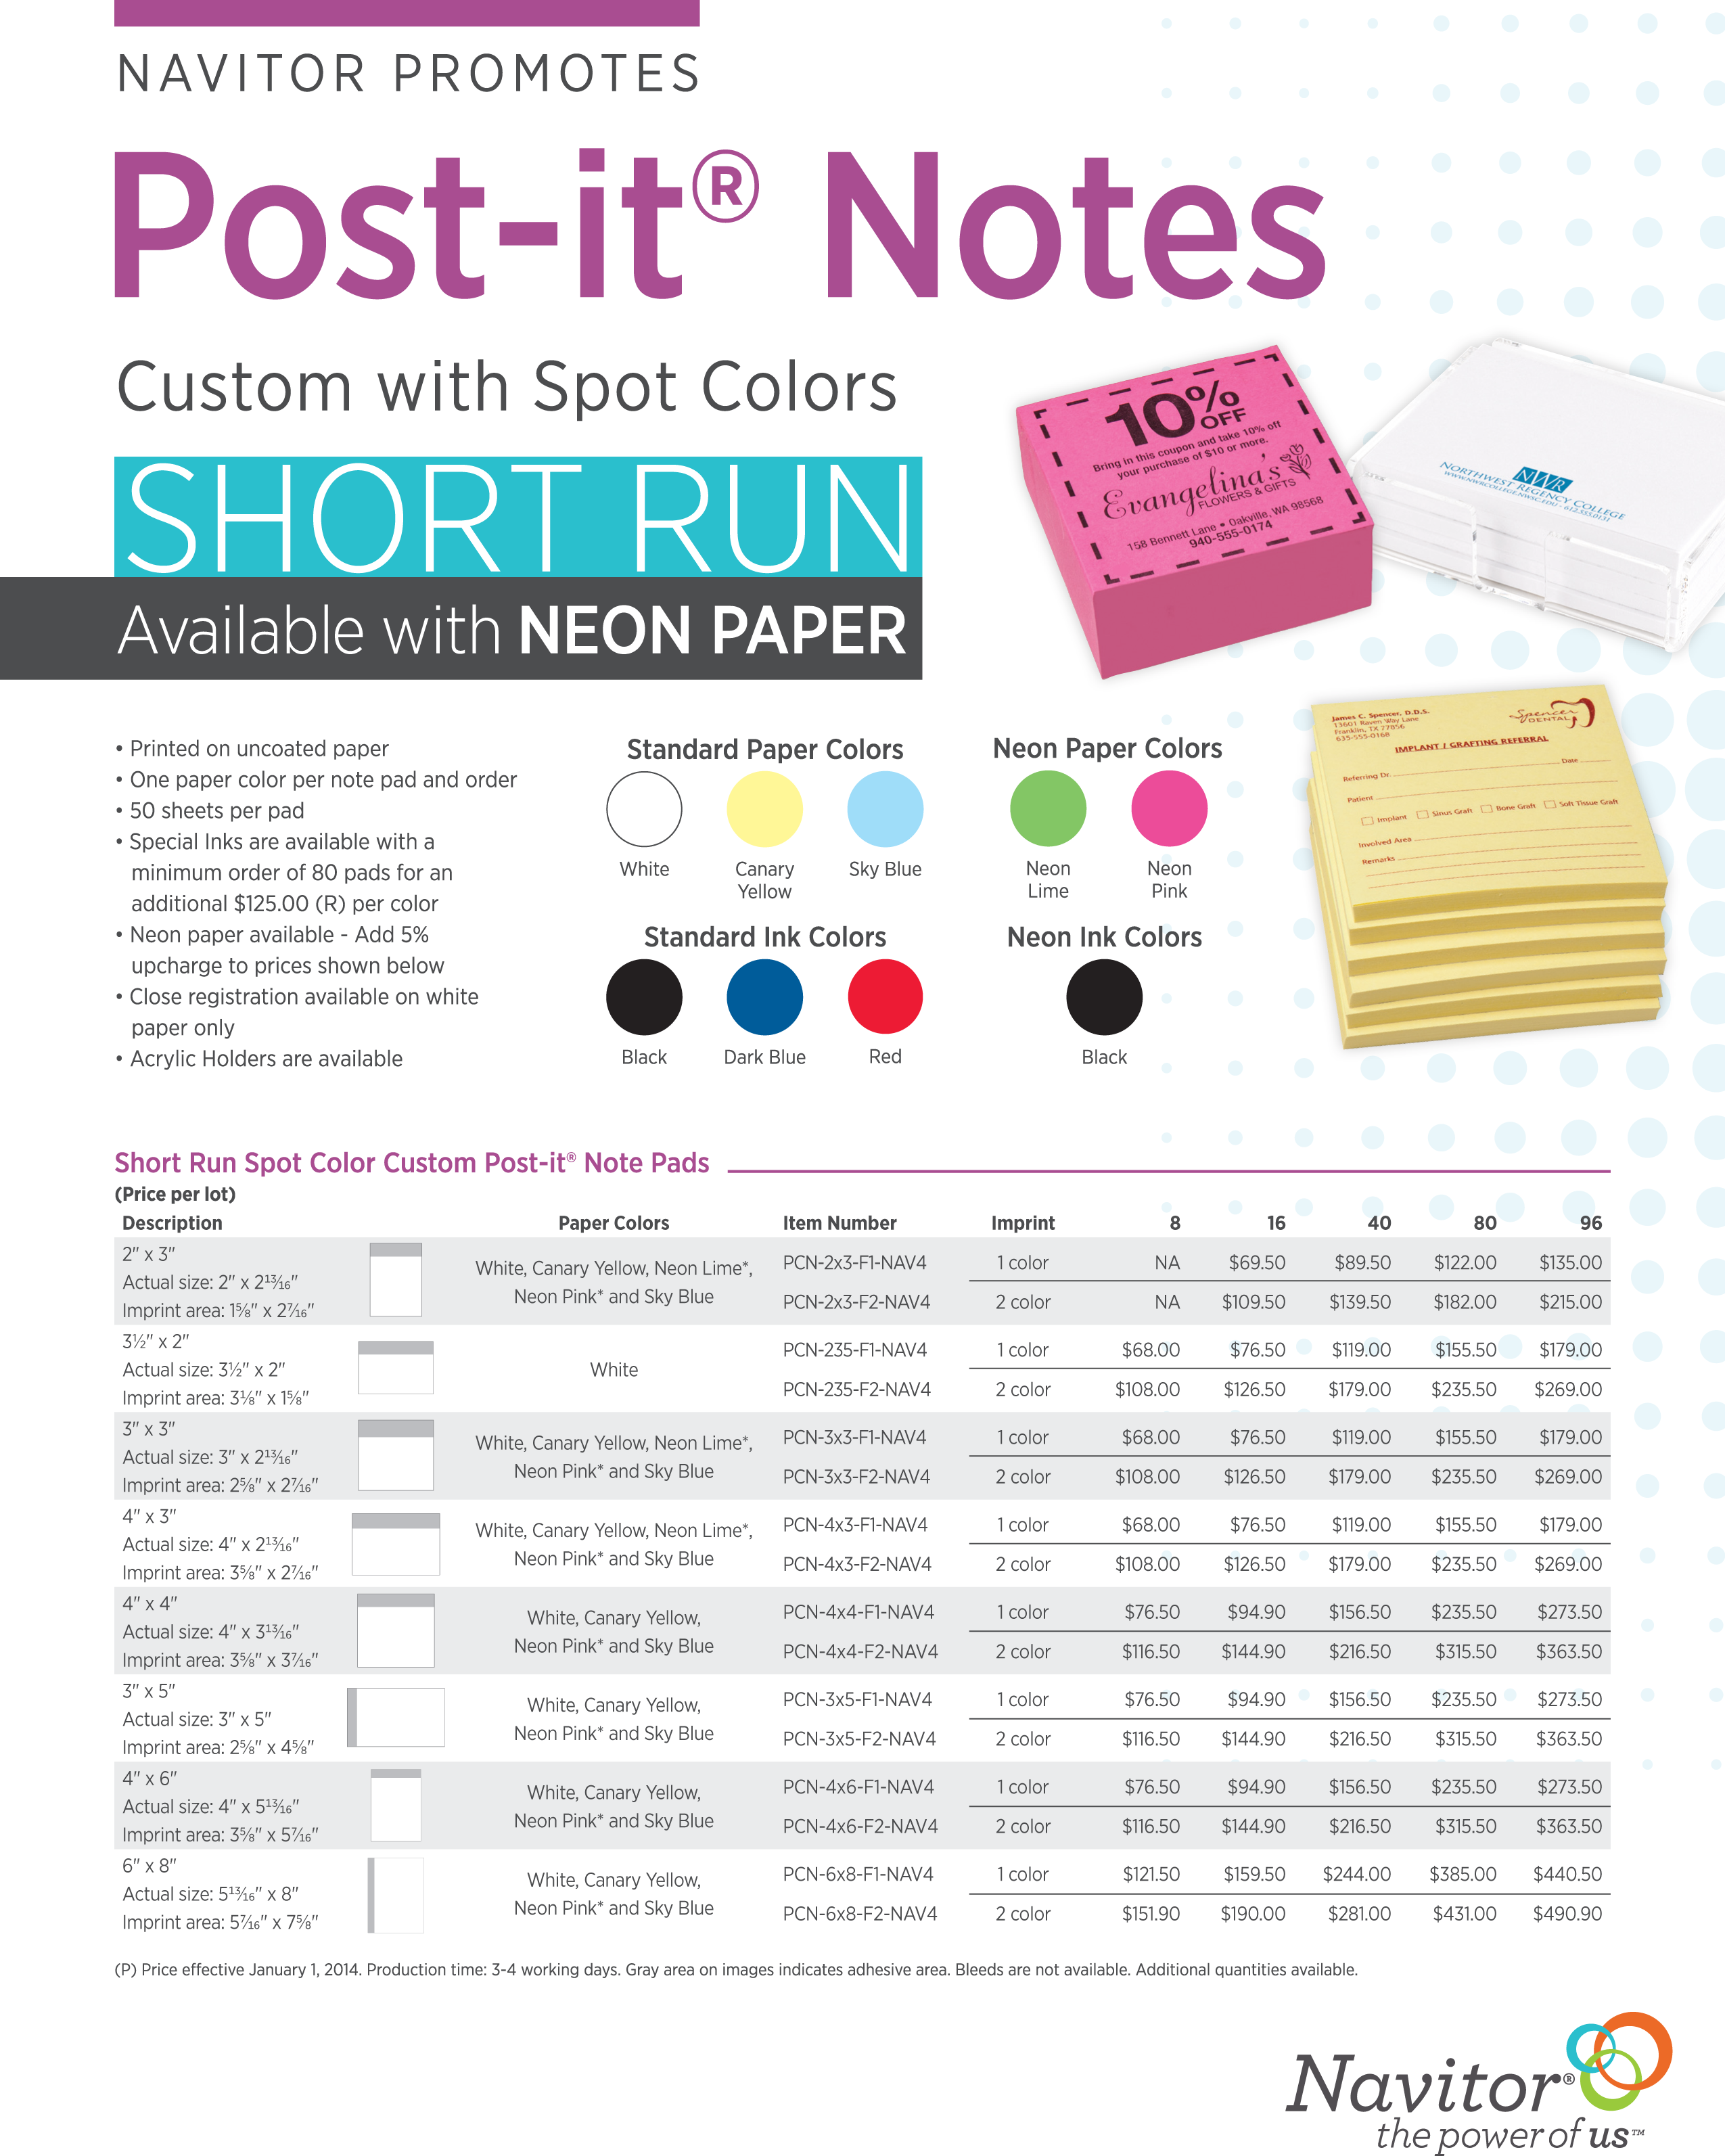 Short Run Post-it Notes